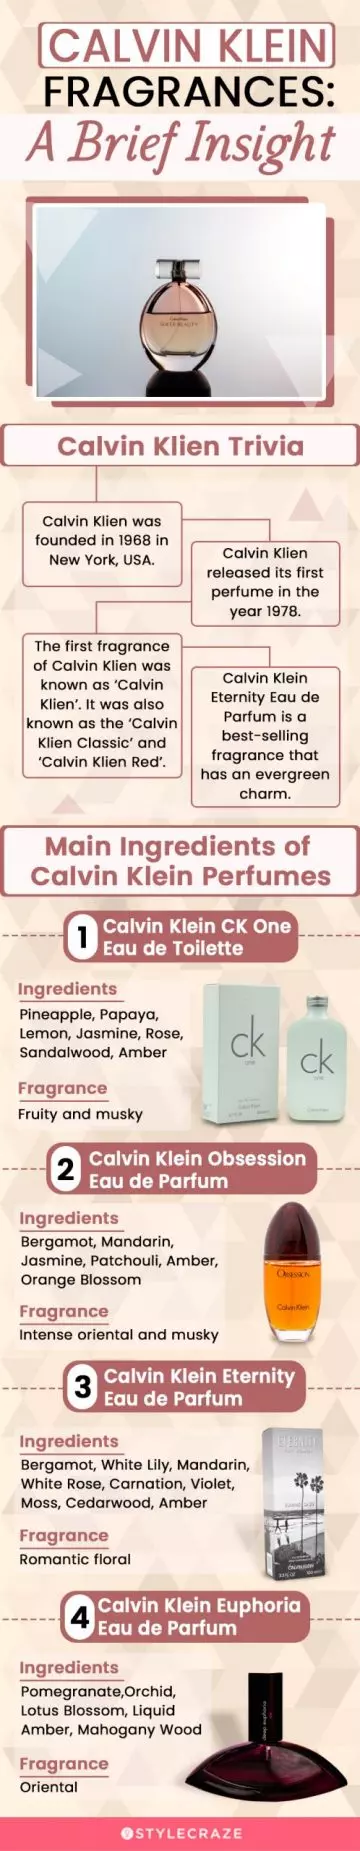 Calvin Klein Fragrances: A Brief Insight (infographic)